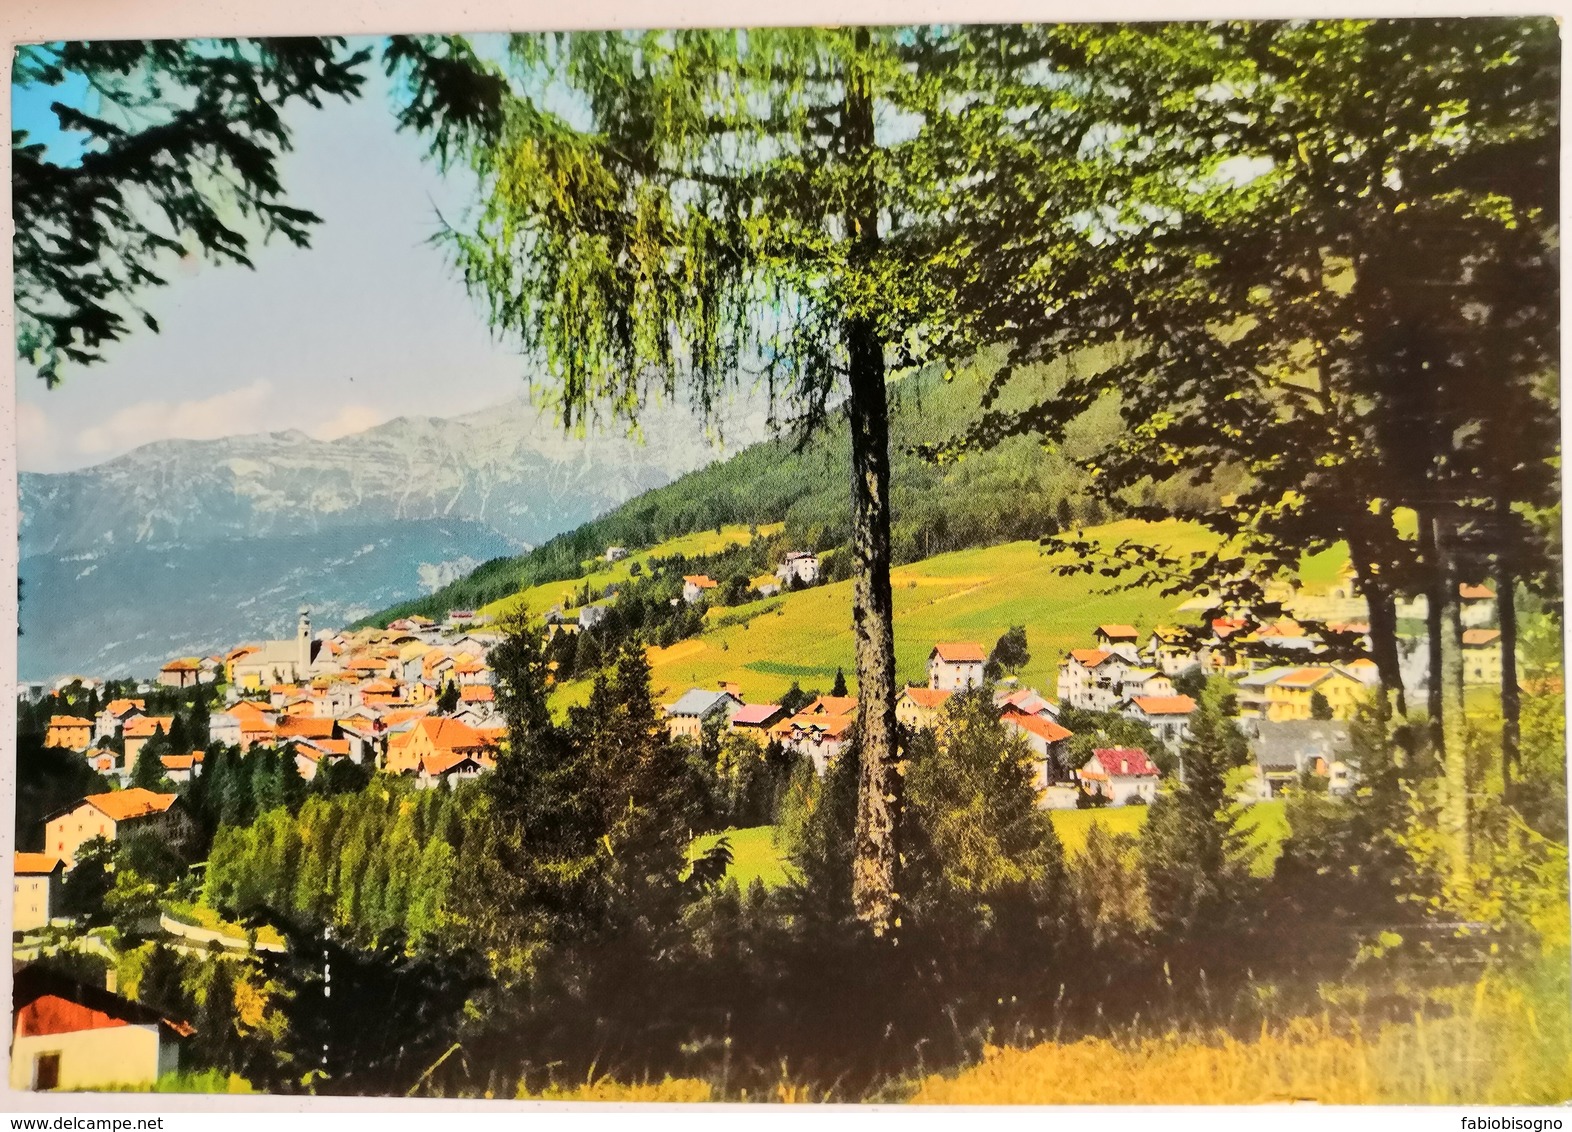 FOLGARIA (DUE CARTOLINE) - FG VG 1979 CON FRANCOBOLLO - Trento